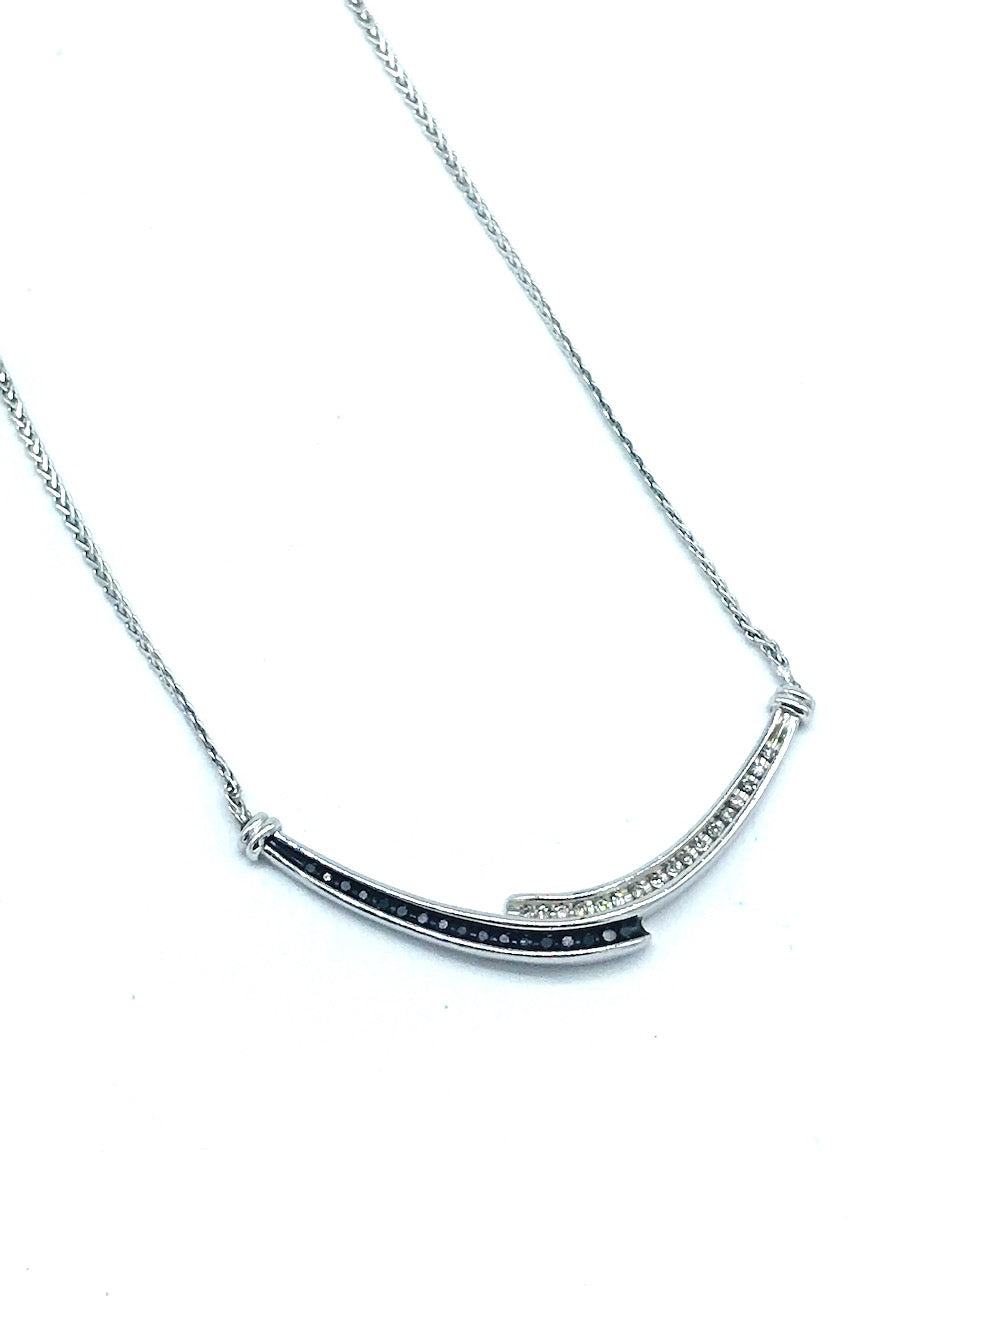 14K Black and White Diamond Necklace .38 Carat Contemporary